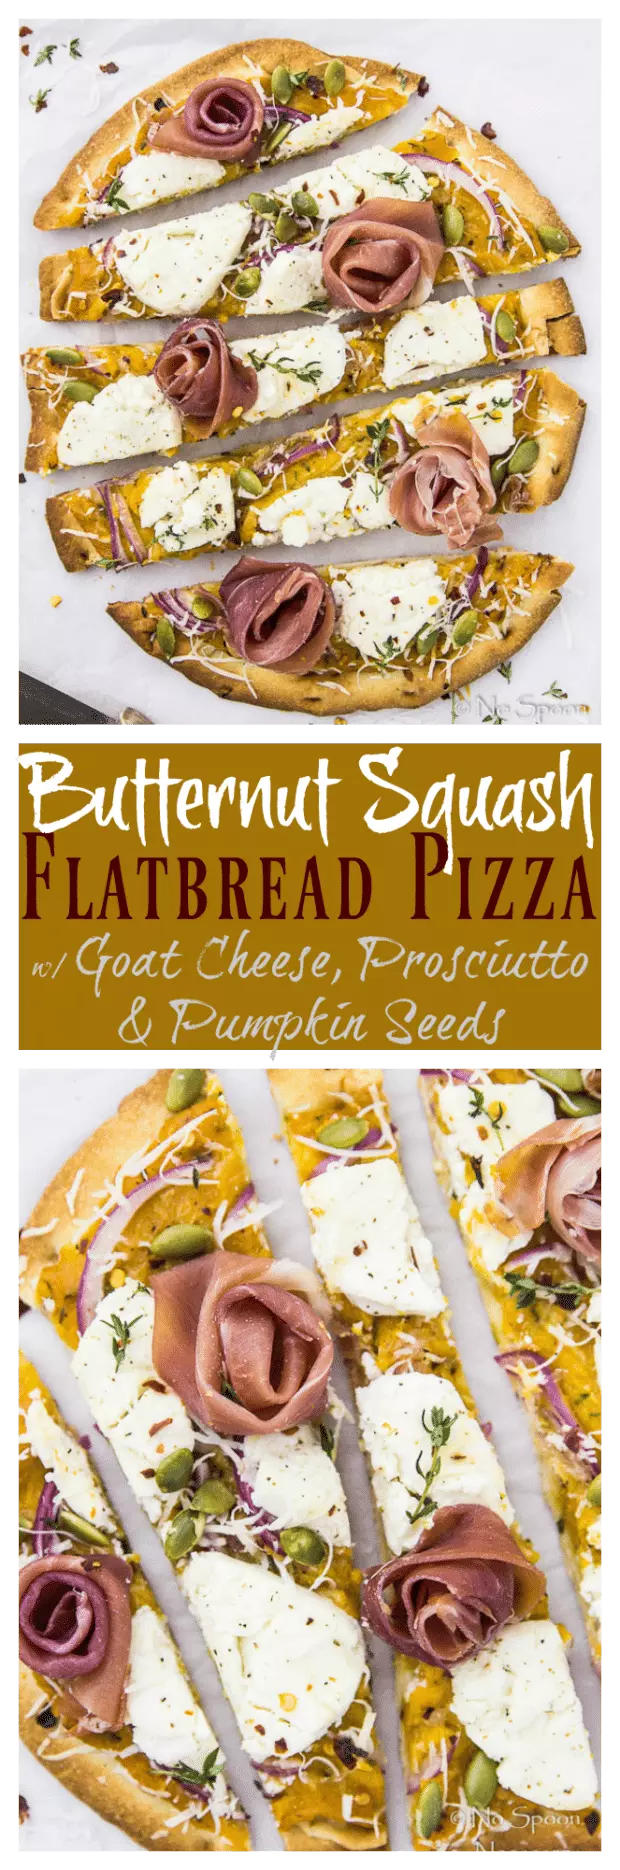 Butternut Squash Flatbread Pizza {with Goat Cheese, Prosciutto & Pumpkin Seeds}